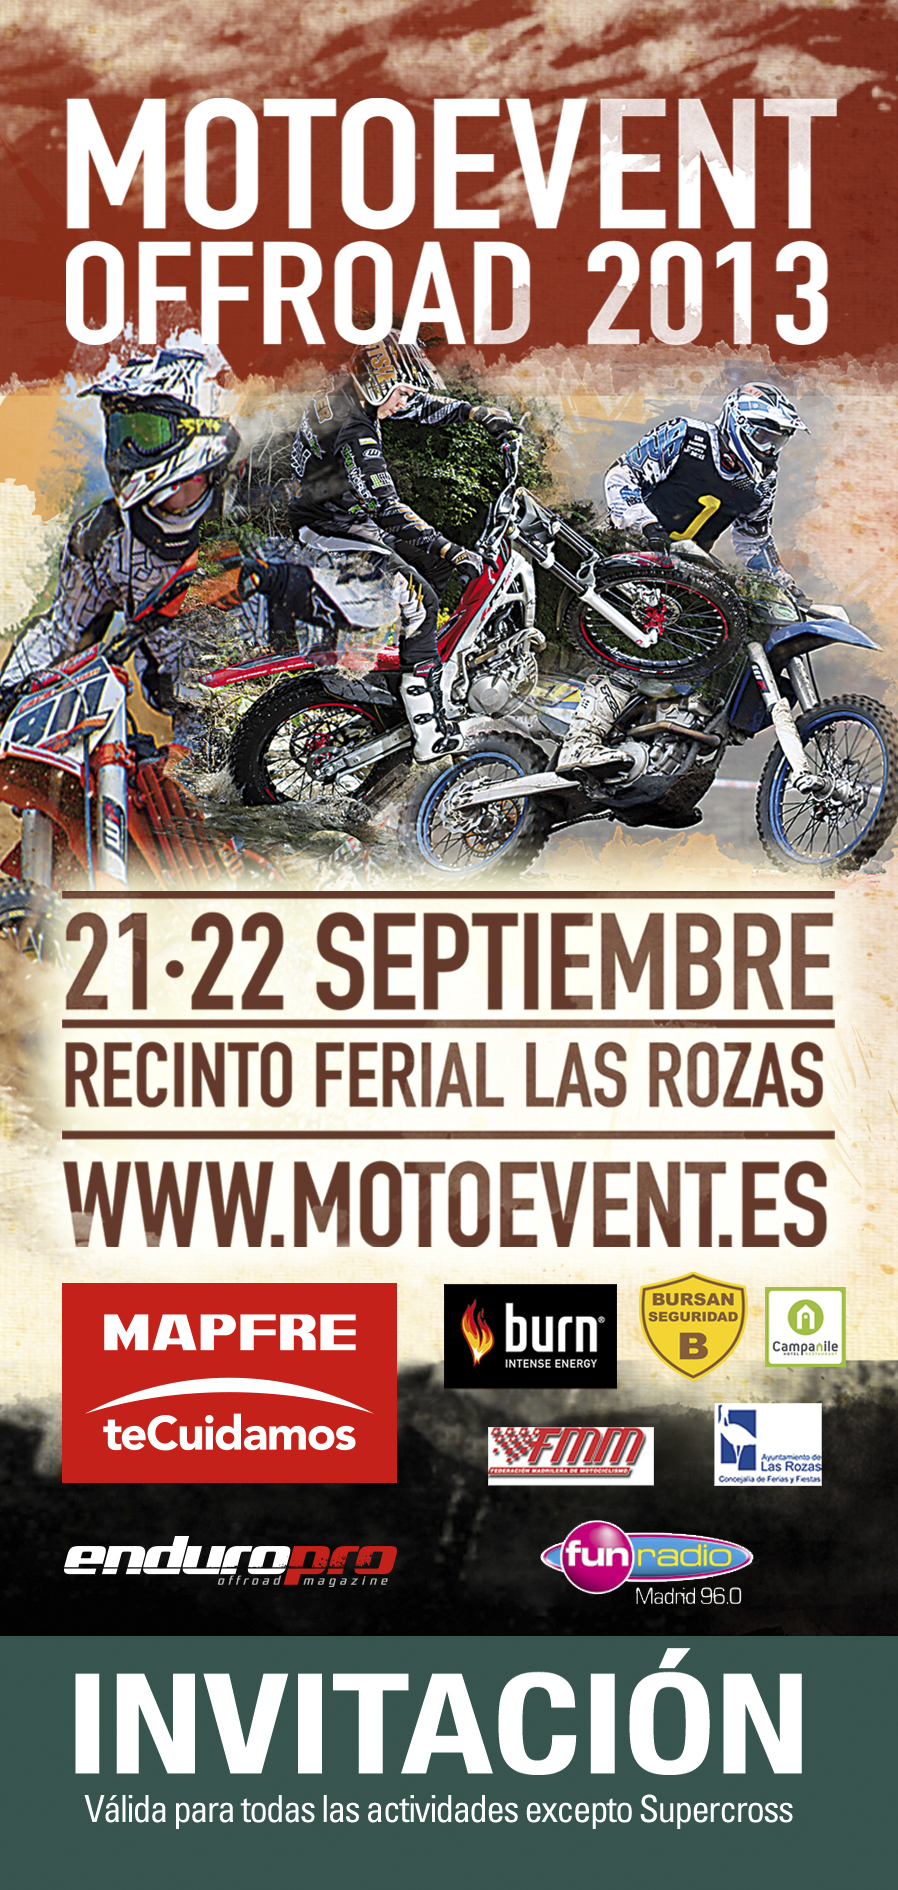 Invitación Motoevent 2013